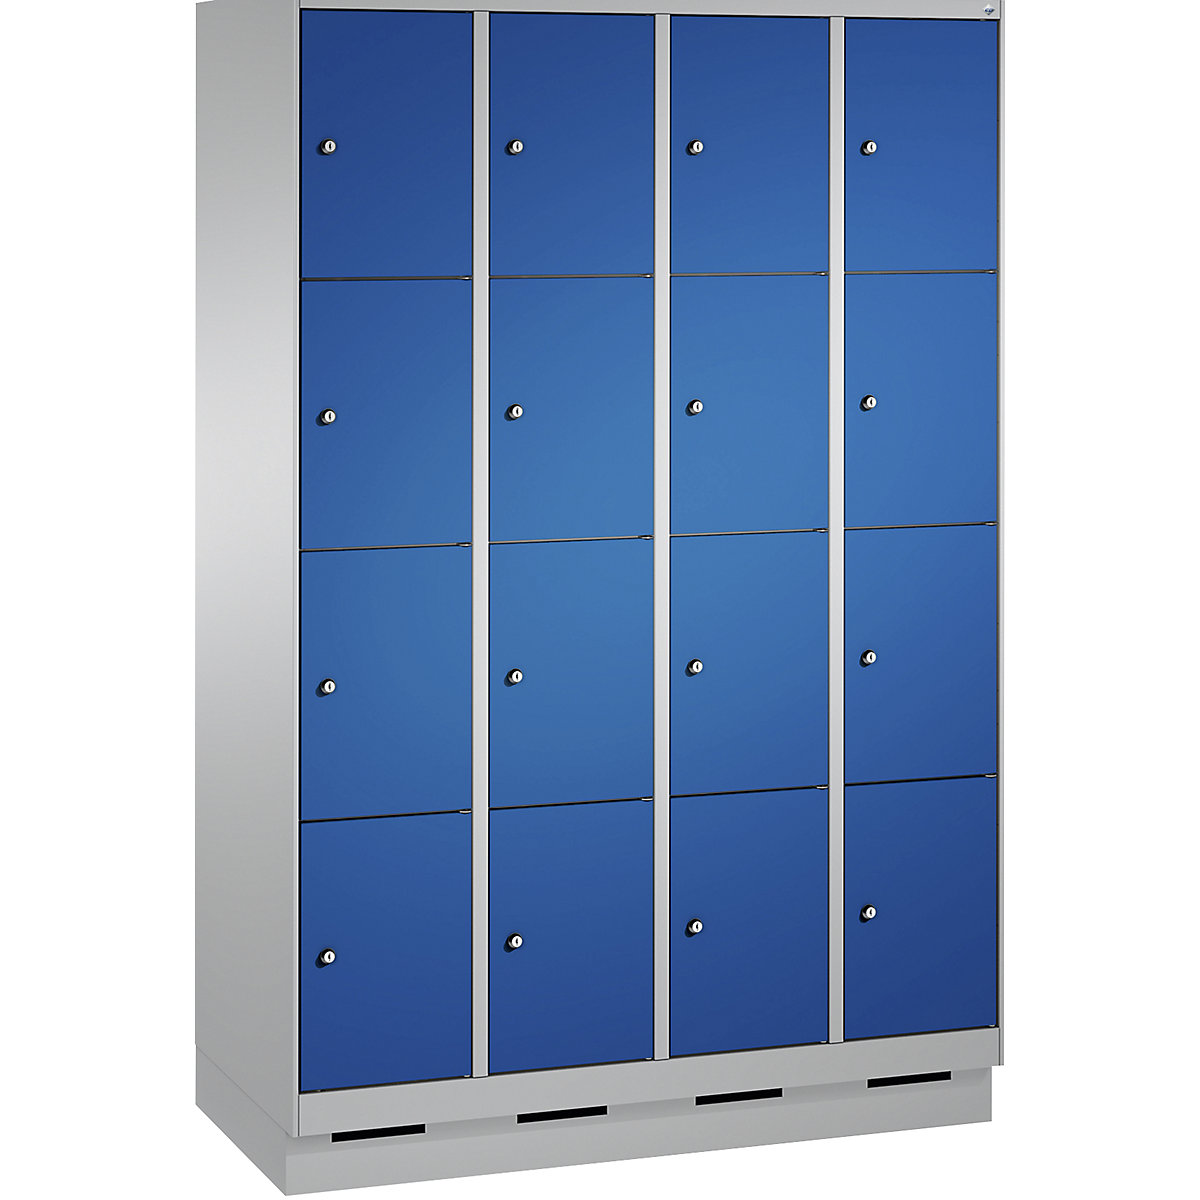 EVOLO locker unit, with plinth – C+P, 4 compartments, 4 shelf compartments each, compartment width 300 mm, white aluminium / gentian blue